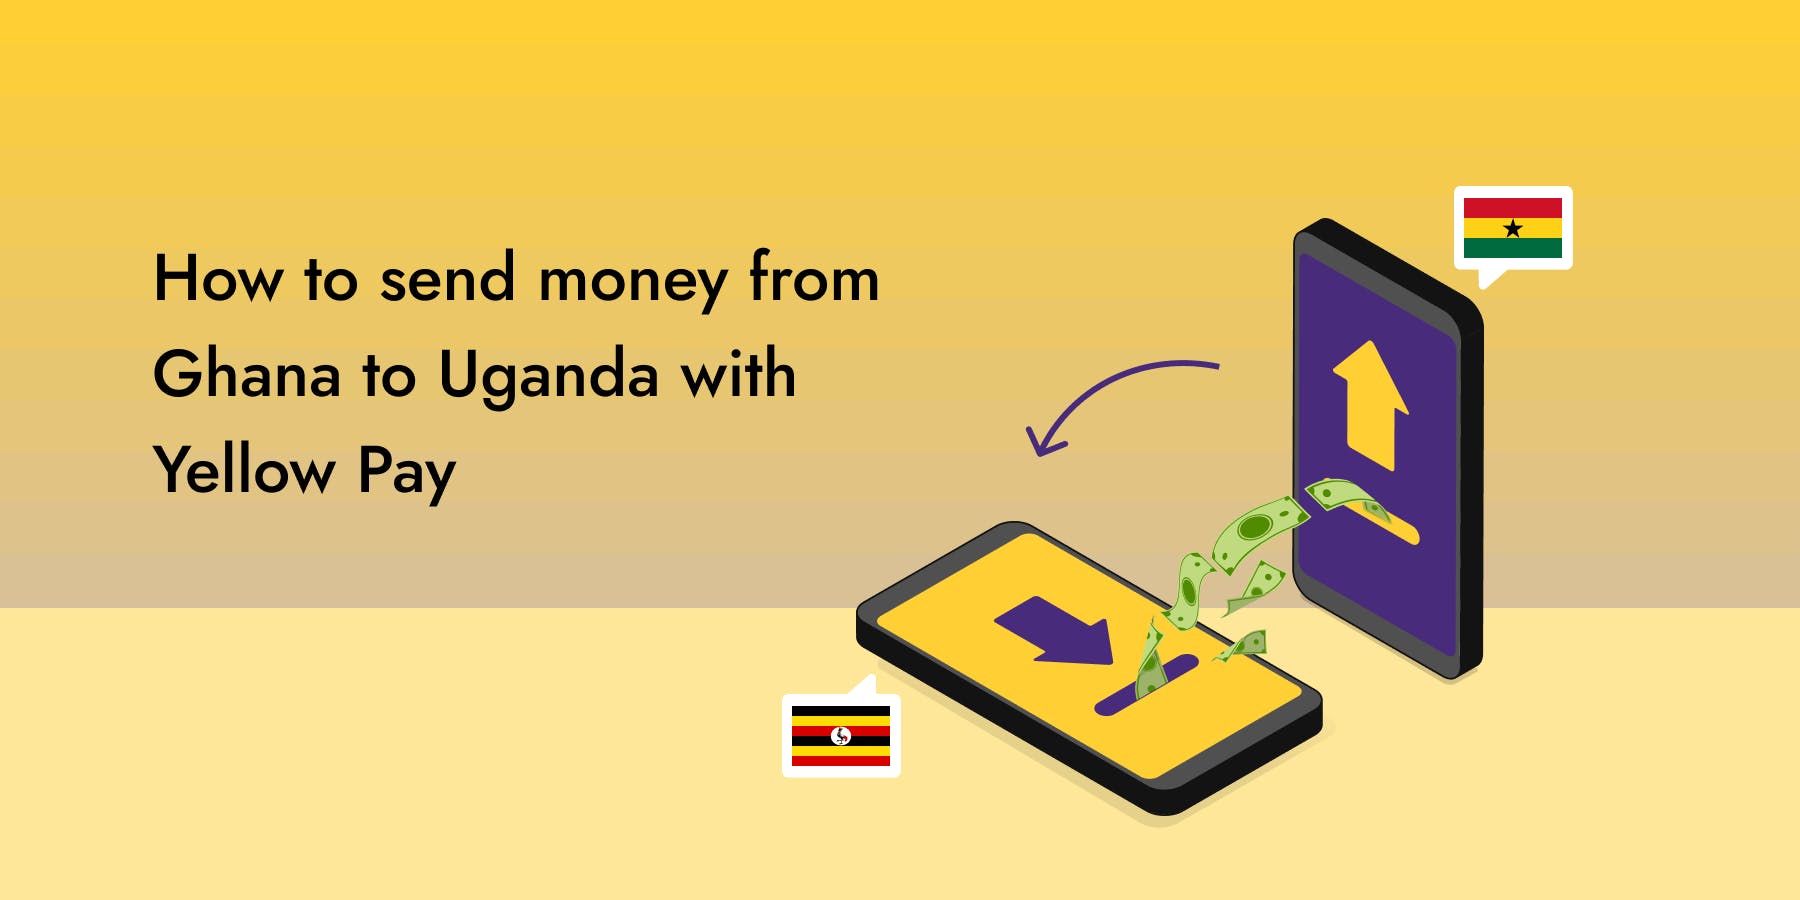 How to send money from Ghana to Uganda